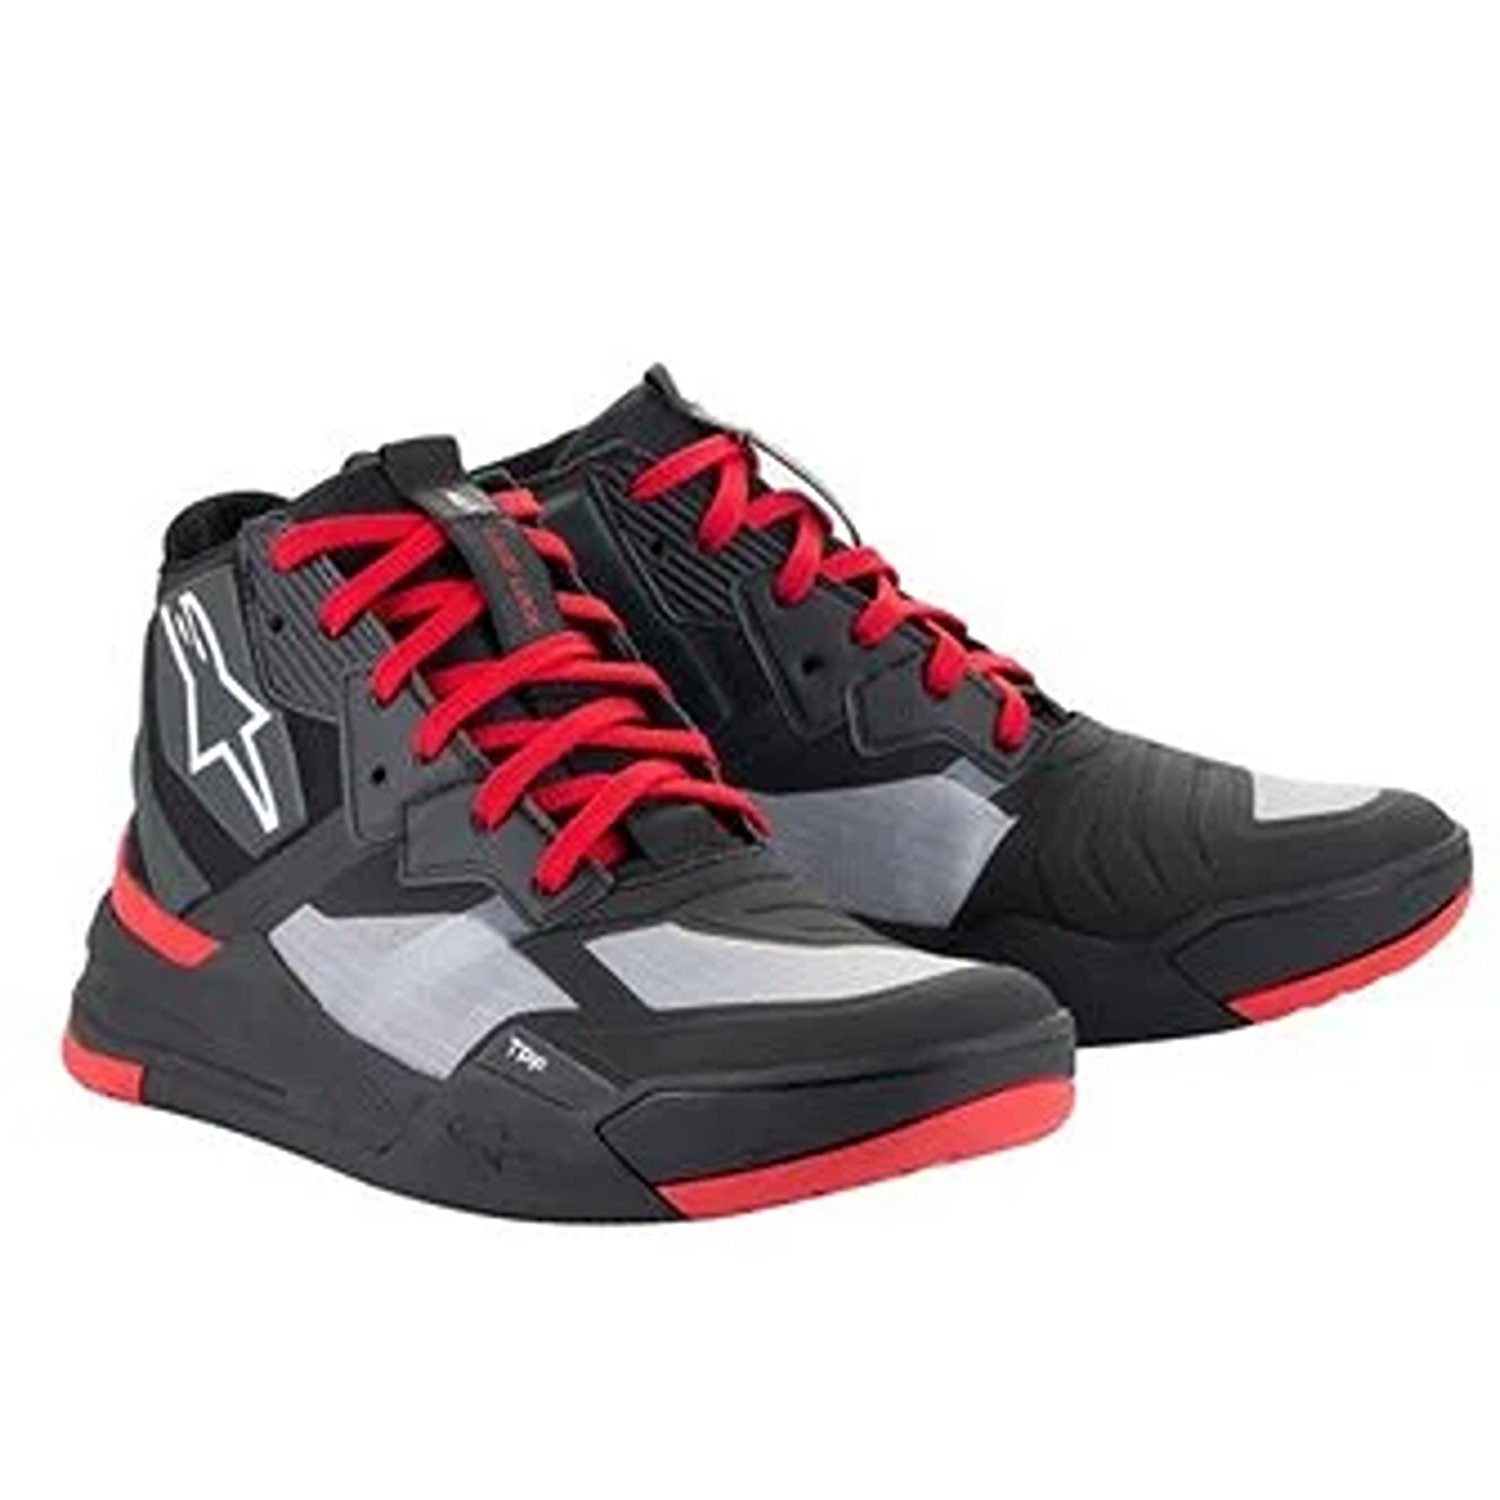 Image of Alpinestars Speedflight Shoes Black Bright Red White Size US 14 ID 8059347263038